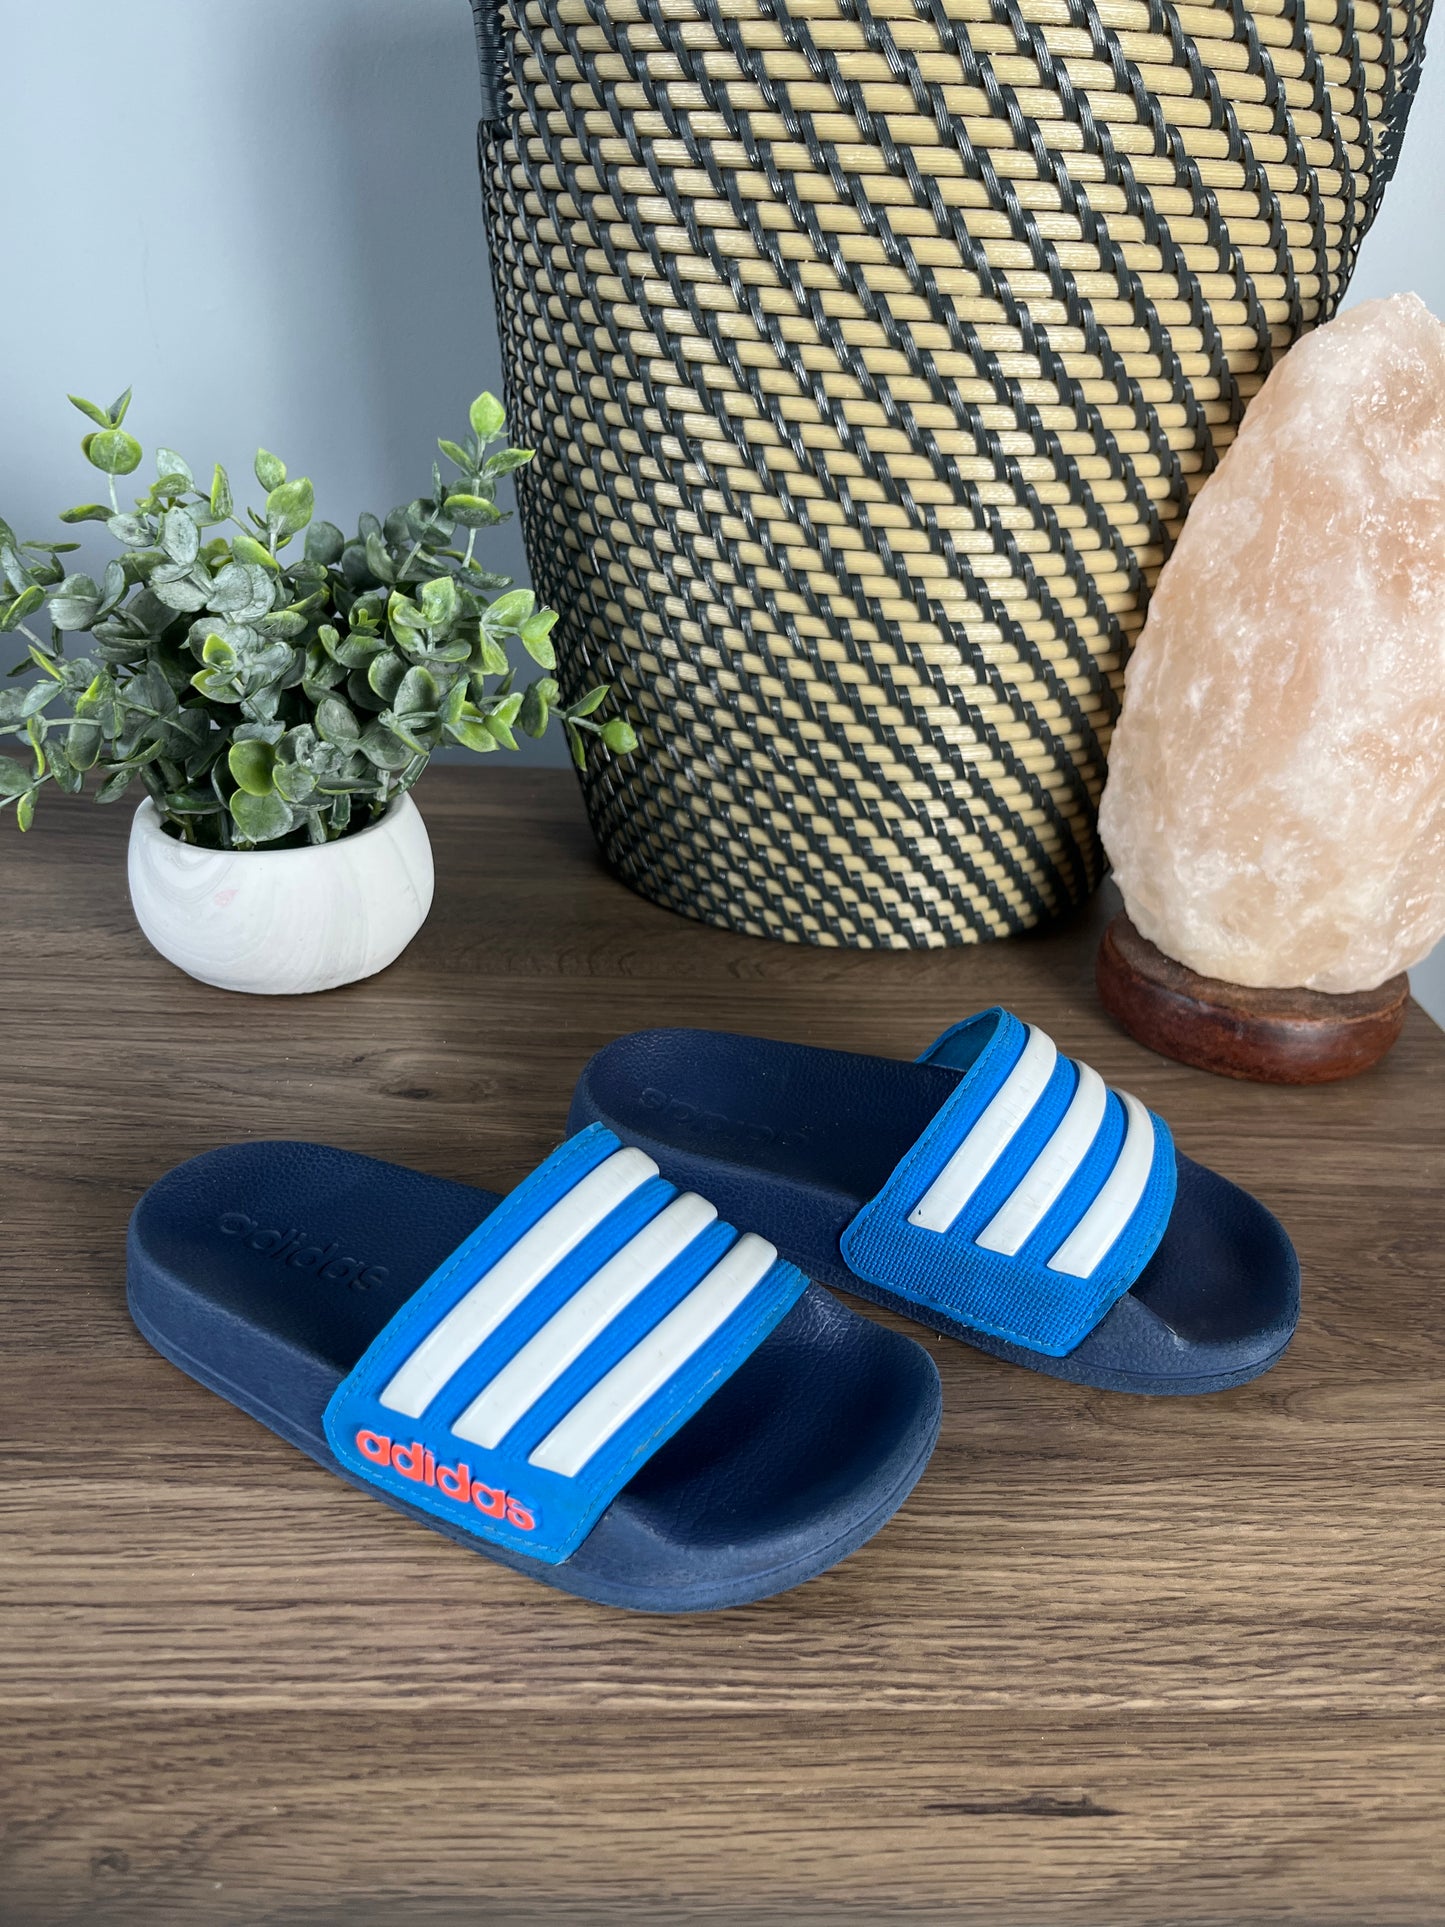 Adidas Boys Size 10 Slide SandalsVGUC